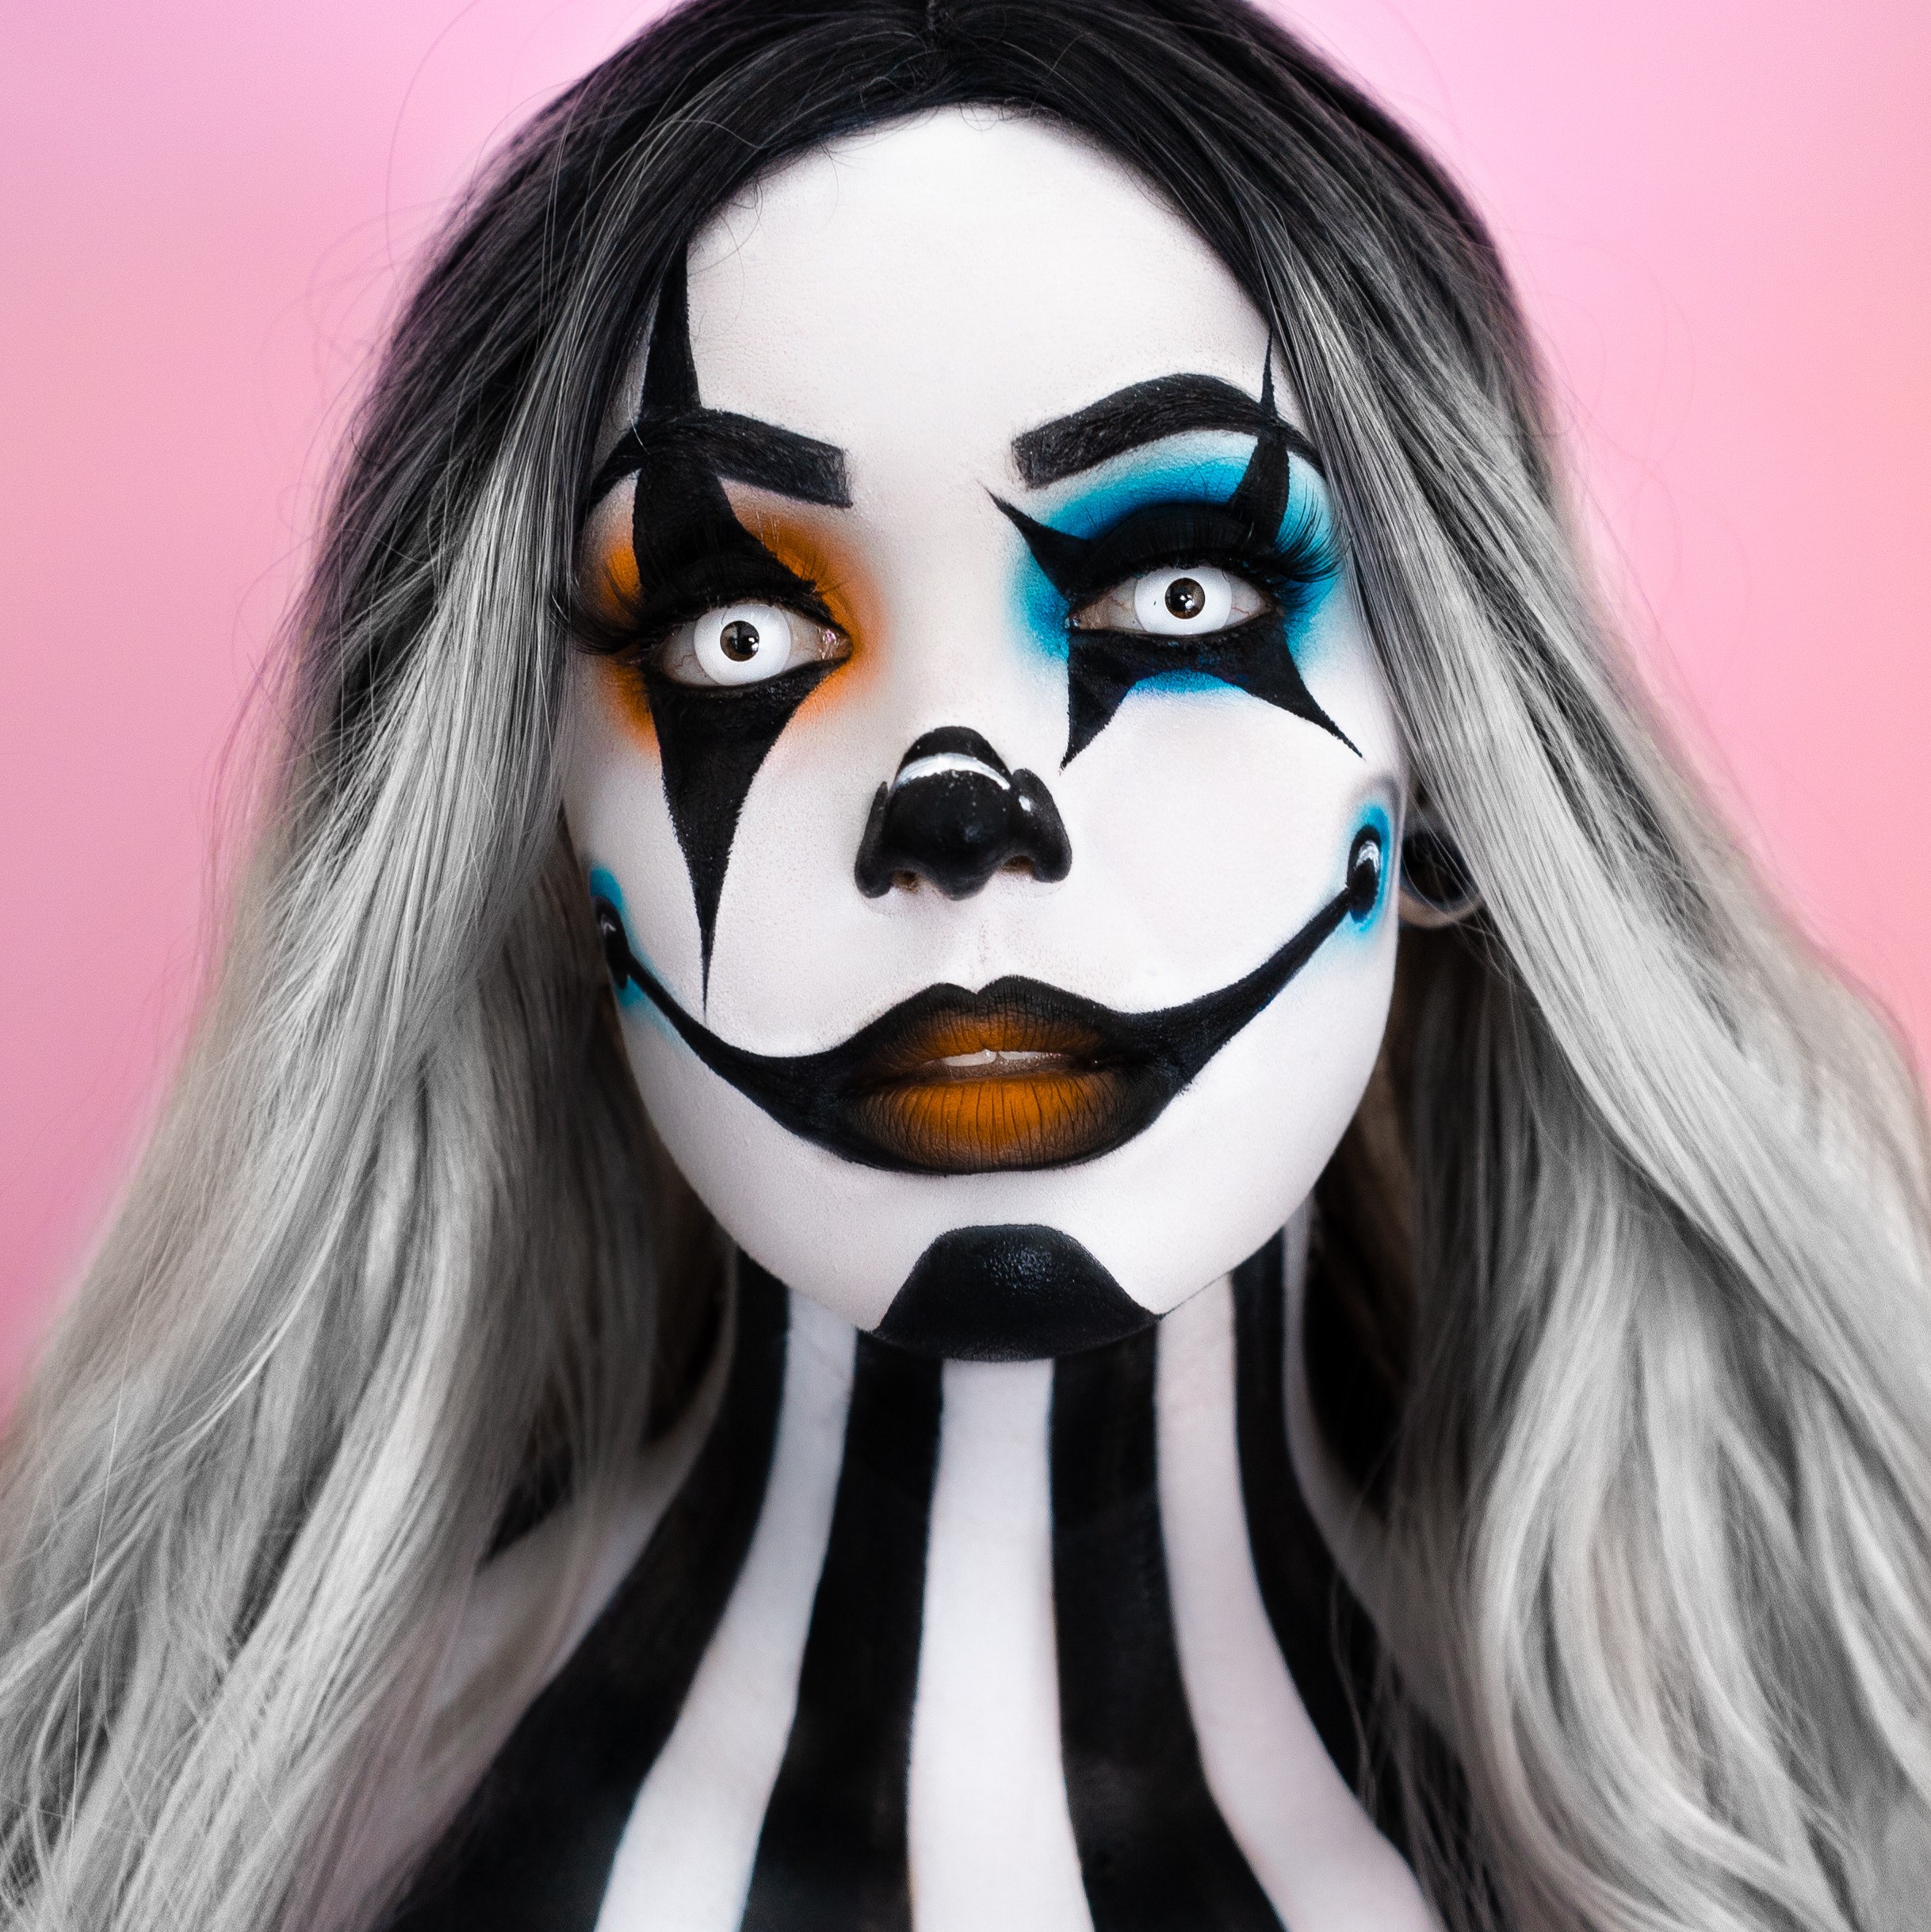 Colorful Clown Makeup Tutorial!!! ll Halloween Looks 